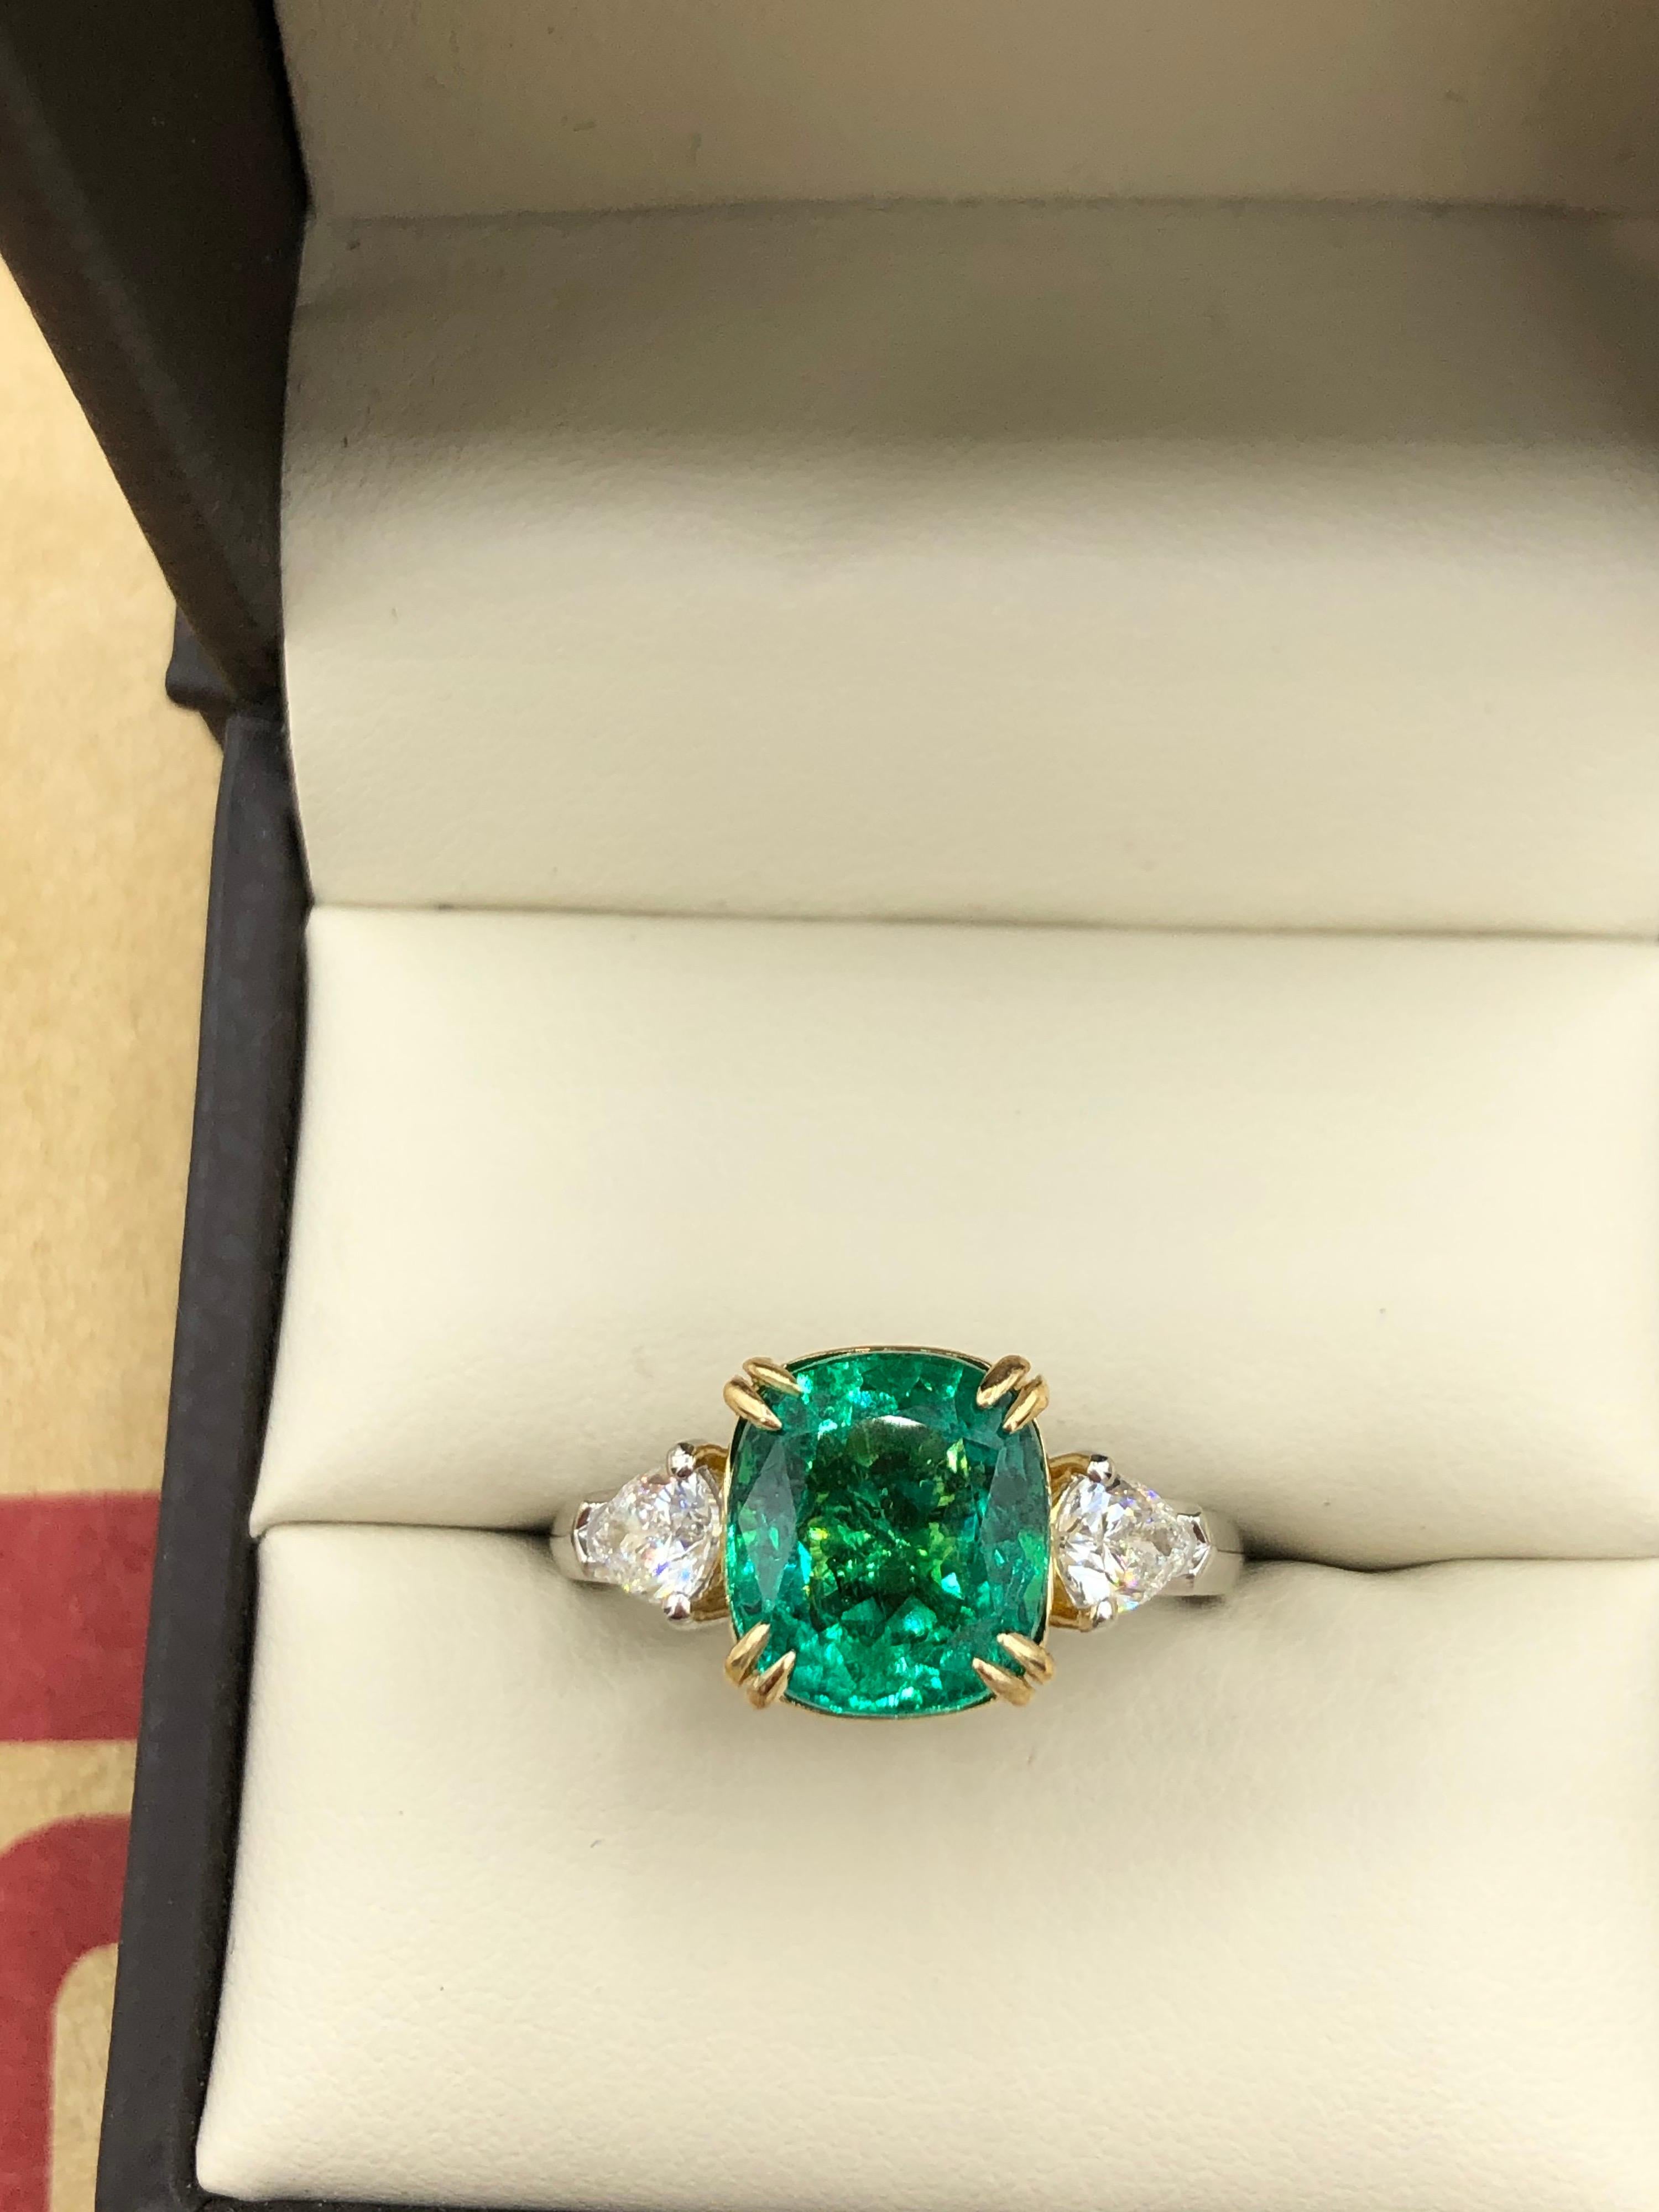 Cushion Cut Emilio Jewelry Certified No Oil Untreated 4.18 Carat Emerald Ring